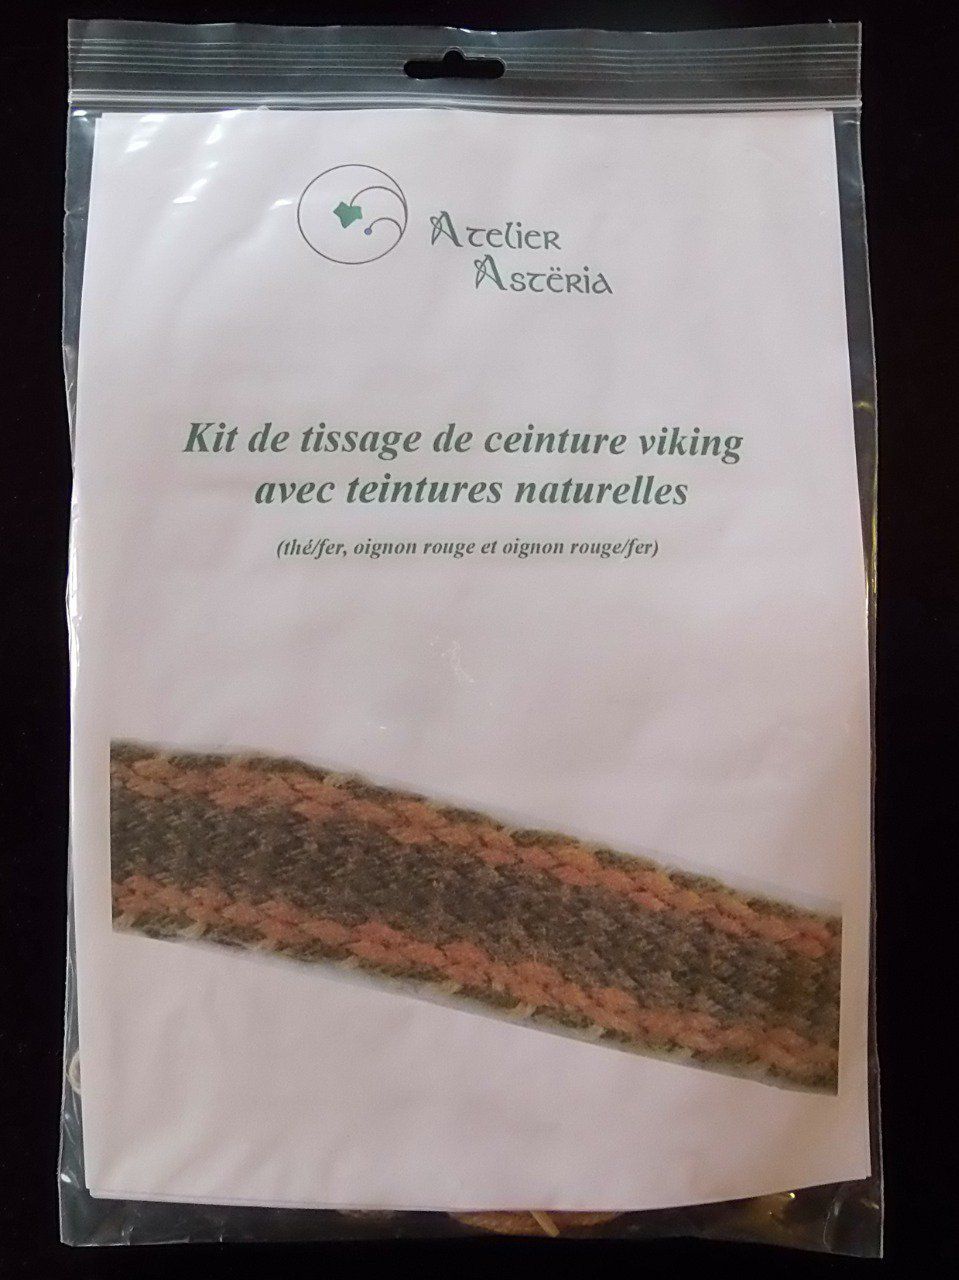 Kit ceinture tissage au peigne viking / Viking band weaving belt kit